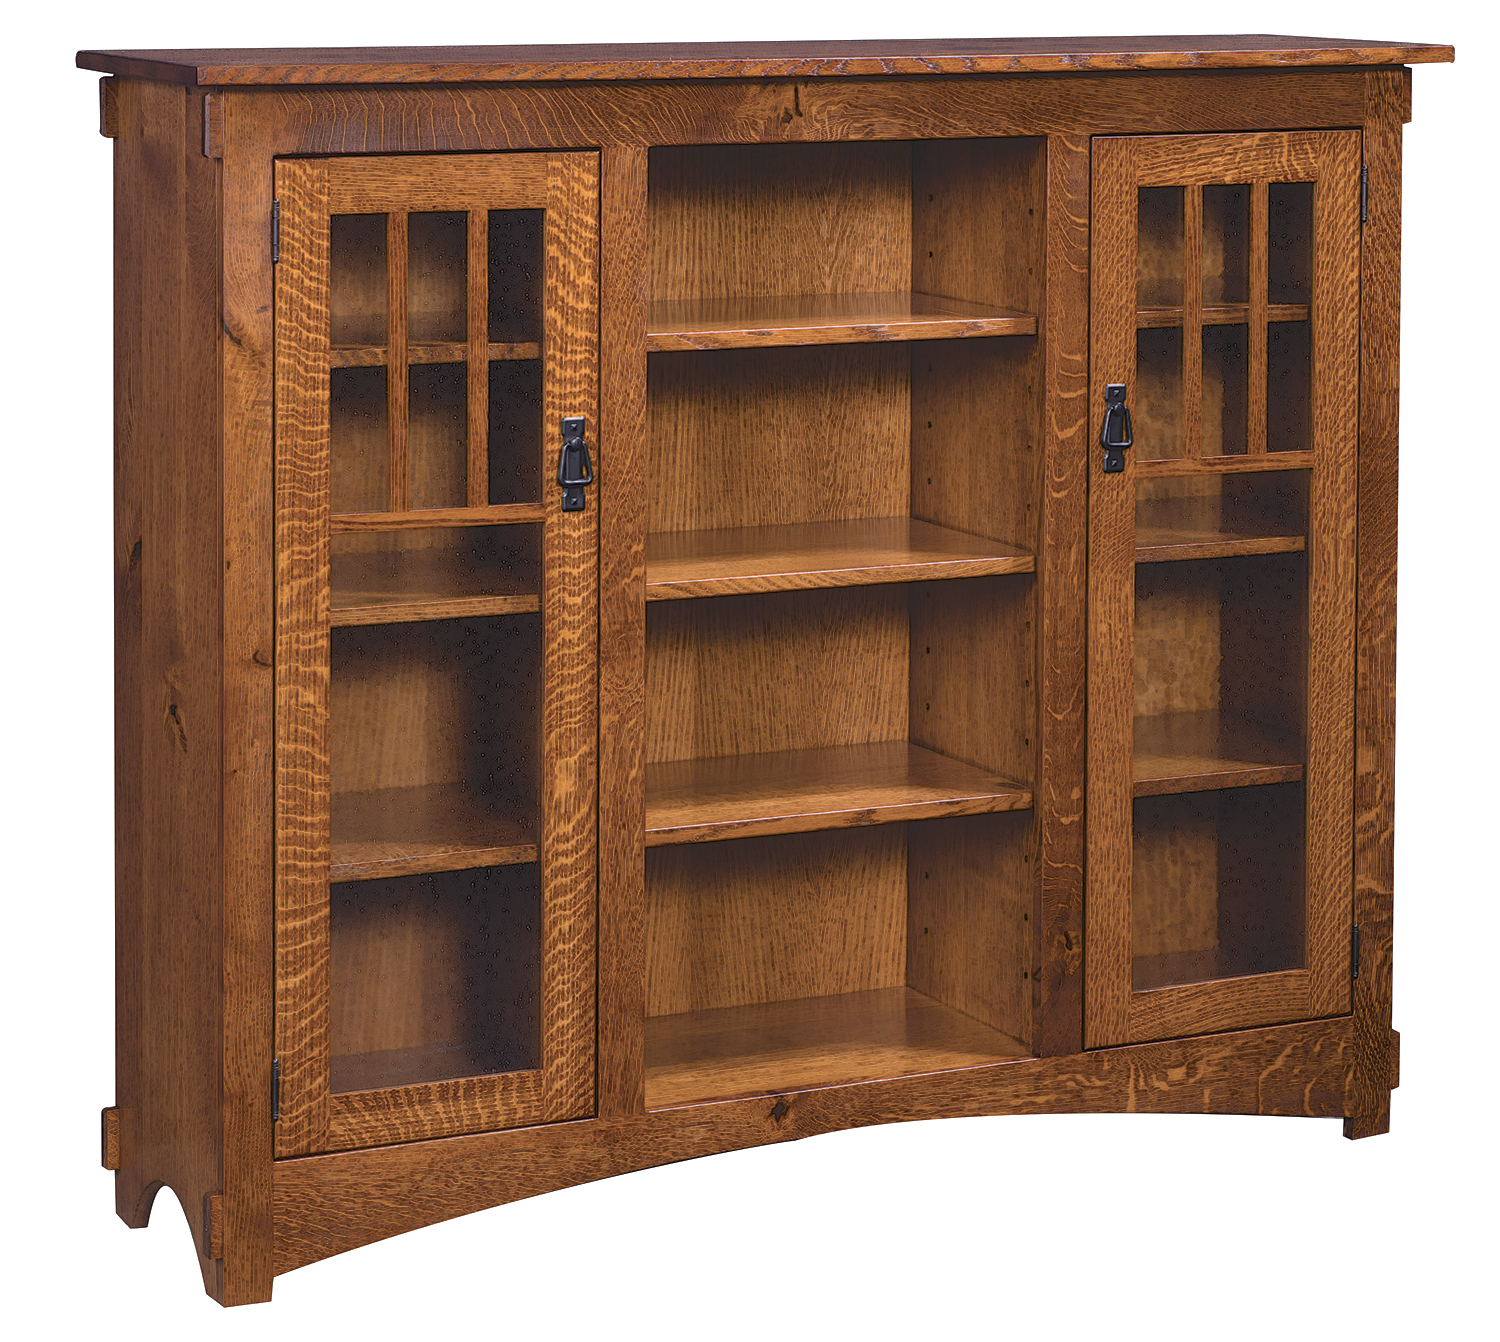 1107 | Swiss Mission Bookcase Valley Furniture – Craftsman